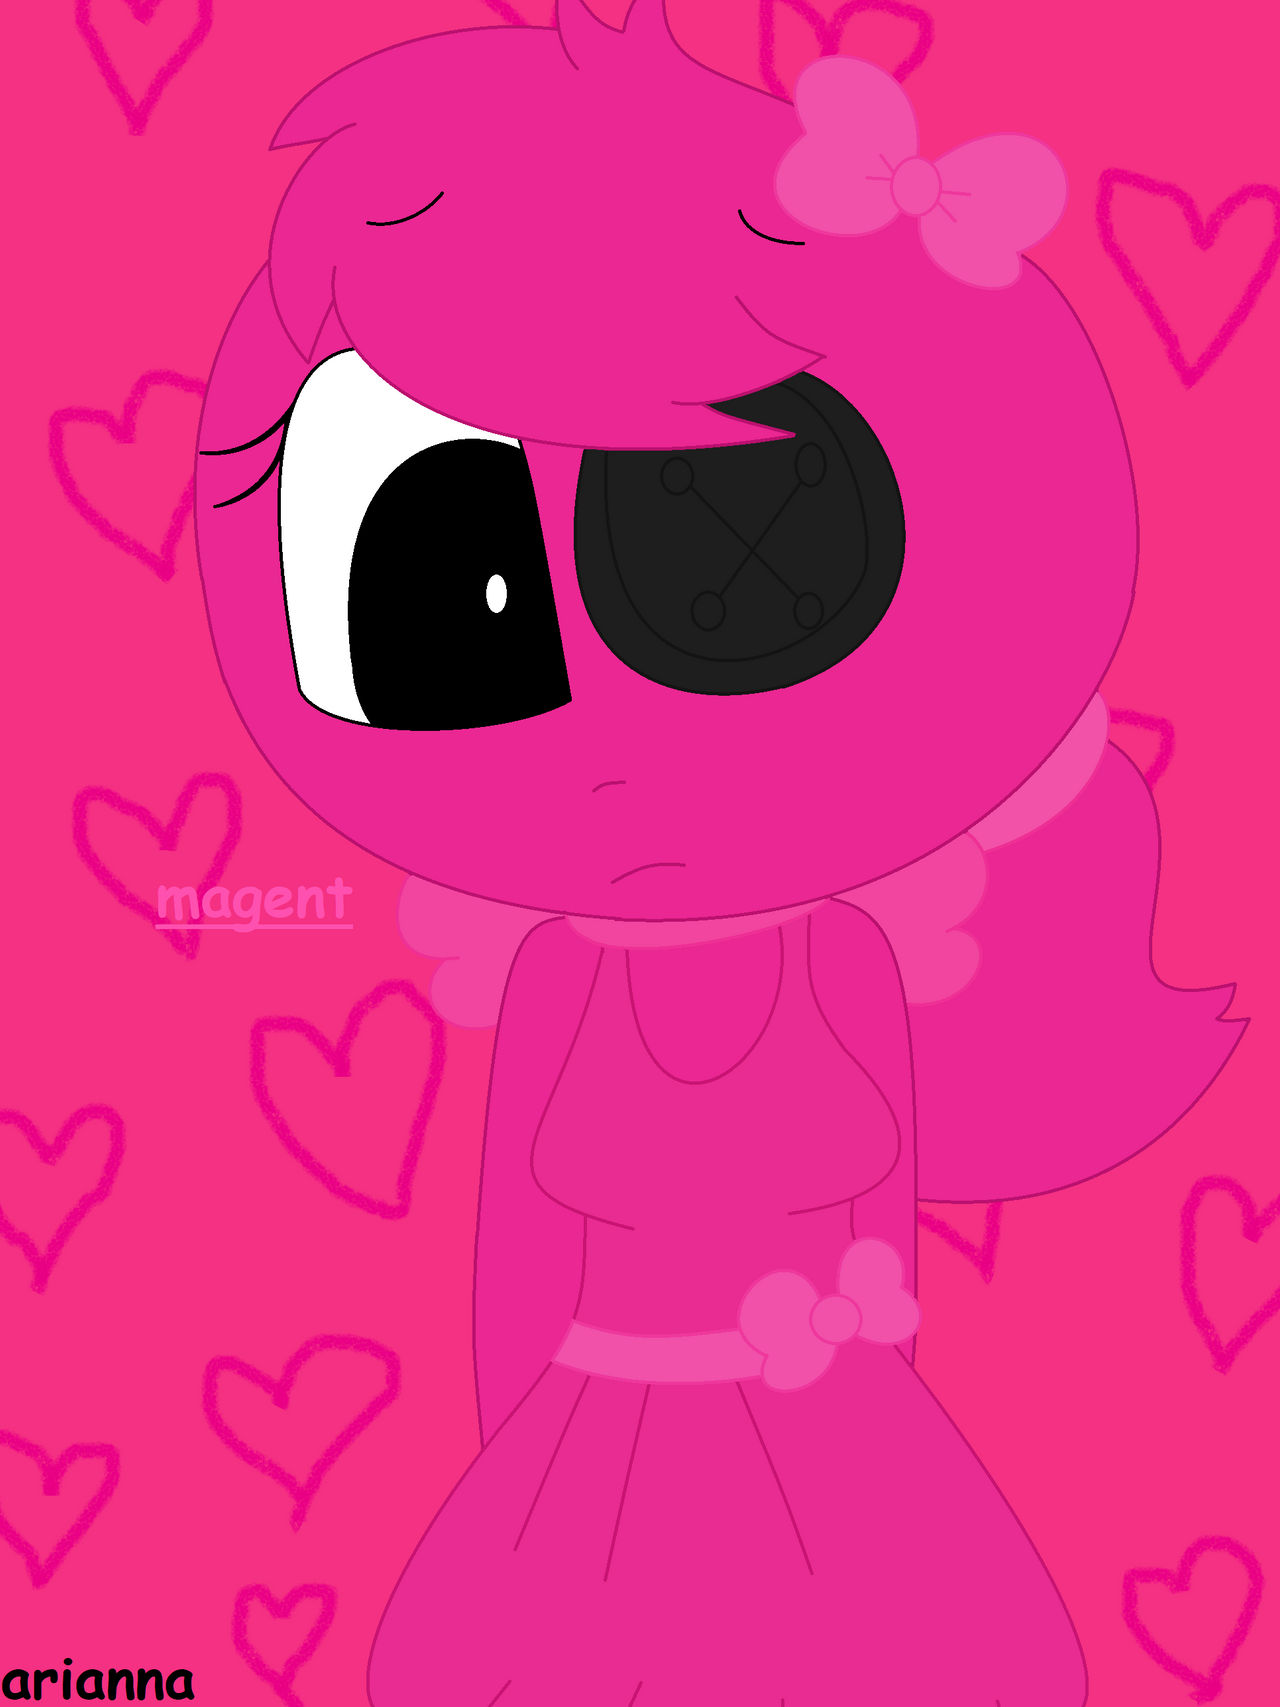 Pink (Rainbow Friends Fan Character) by DarkDragonDeception on DeviantArt